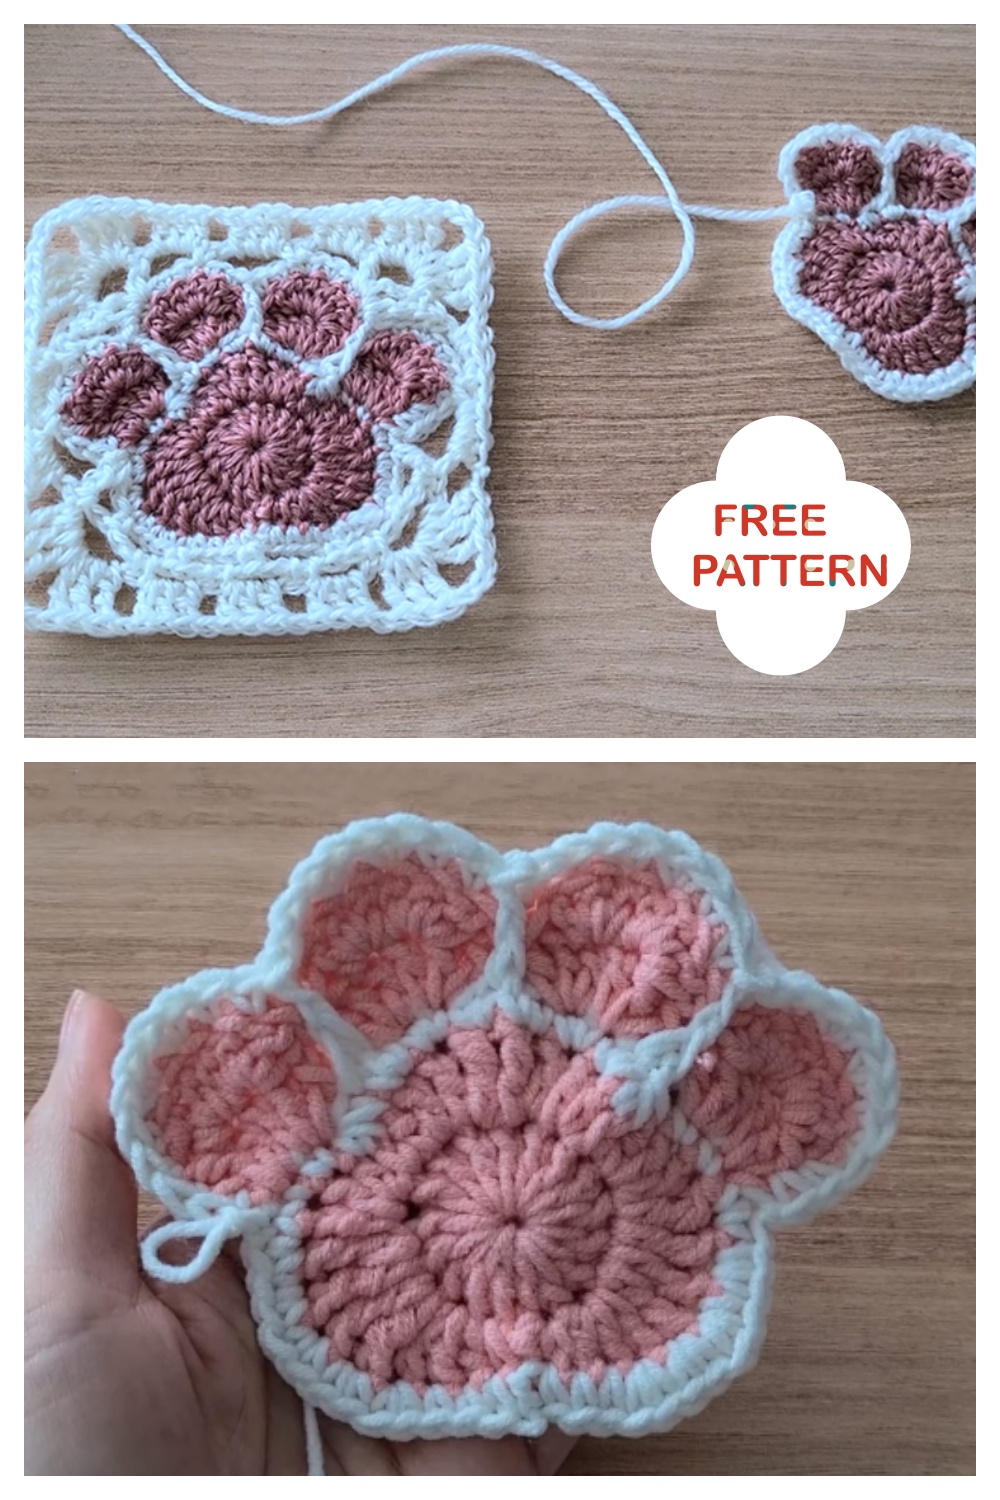 7 Paw Print Blanket Crochet Patterns - FREE